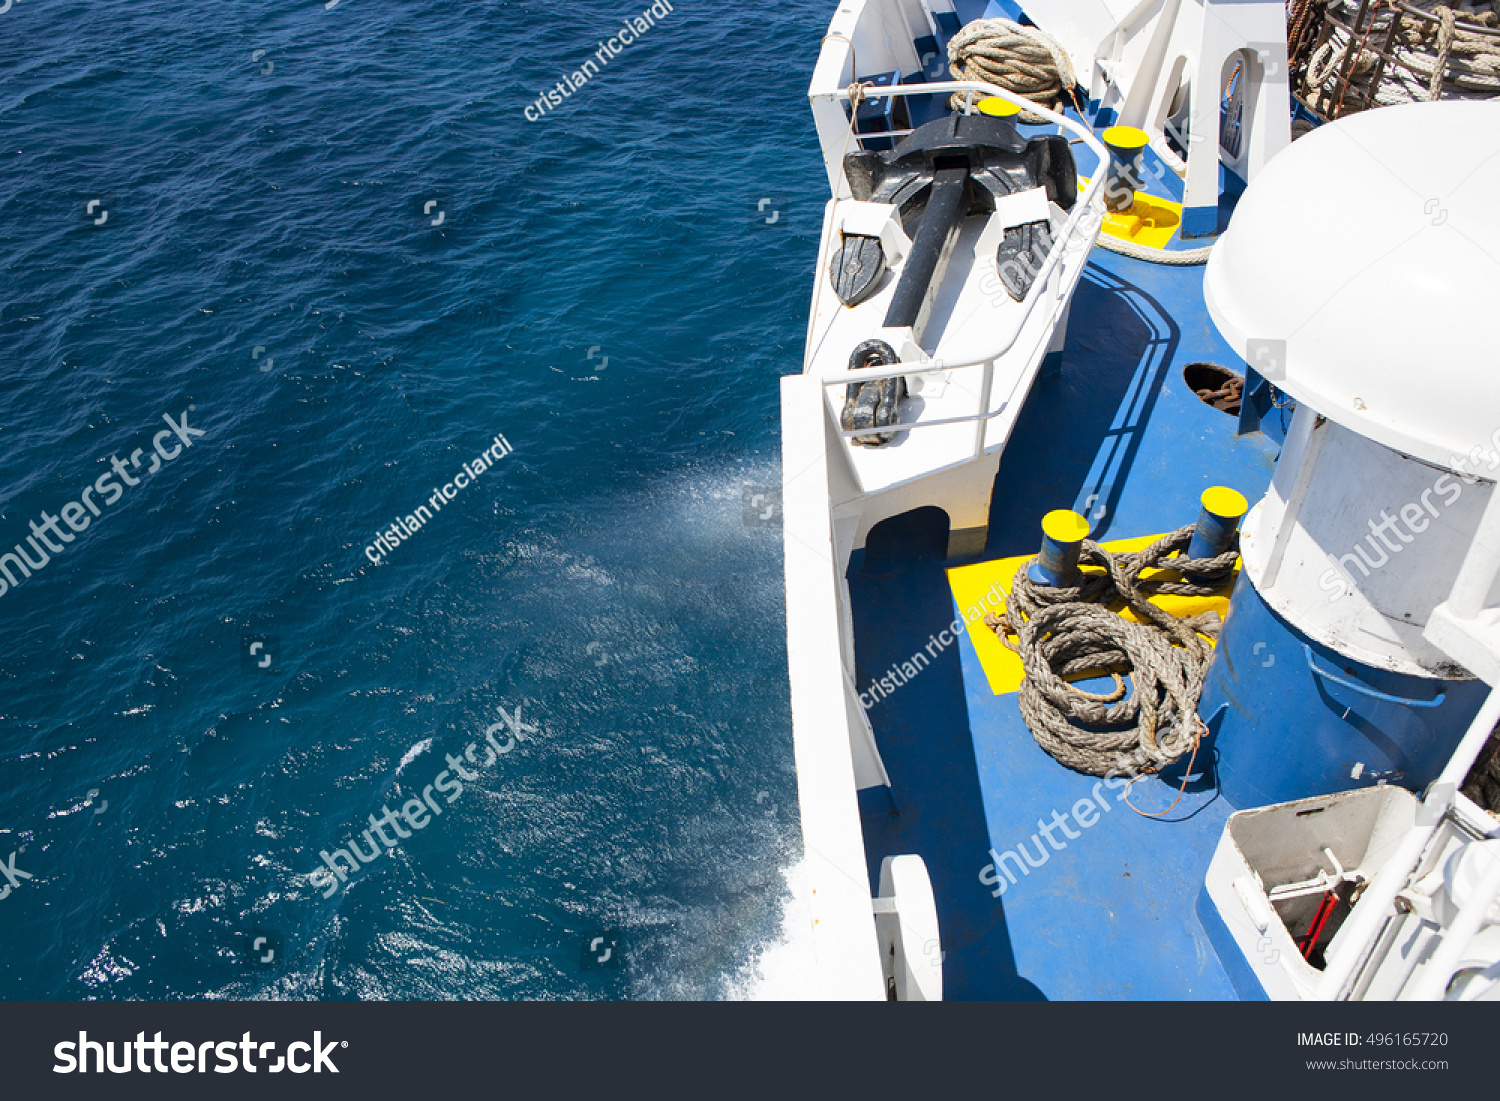 Ferryboat Stock Photo 496165720 - Shutterstock